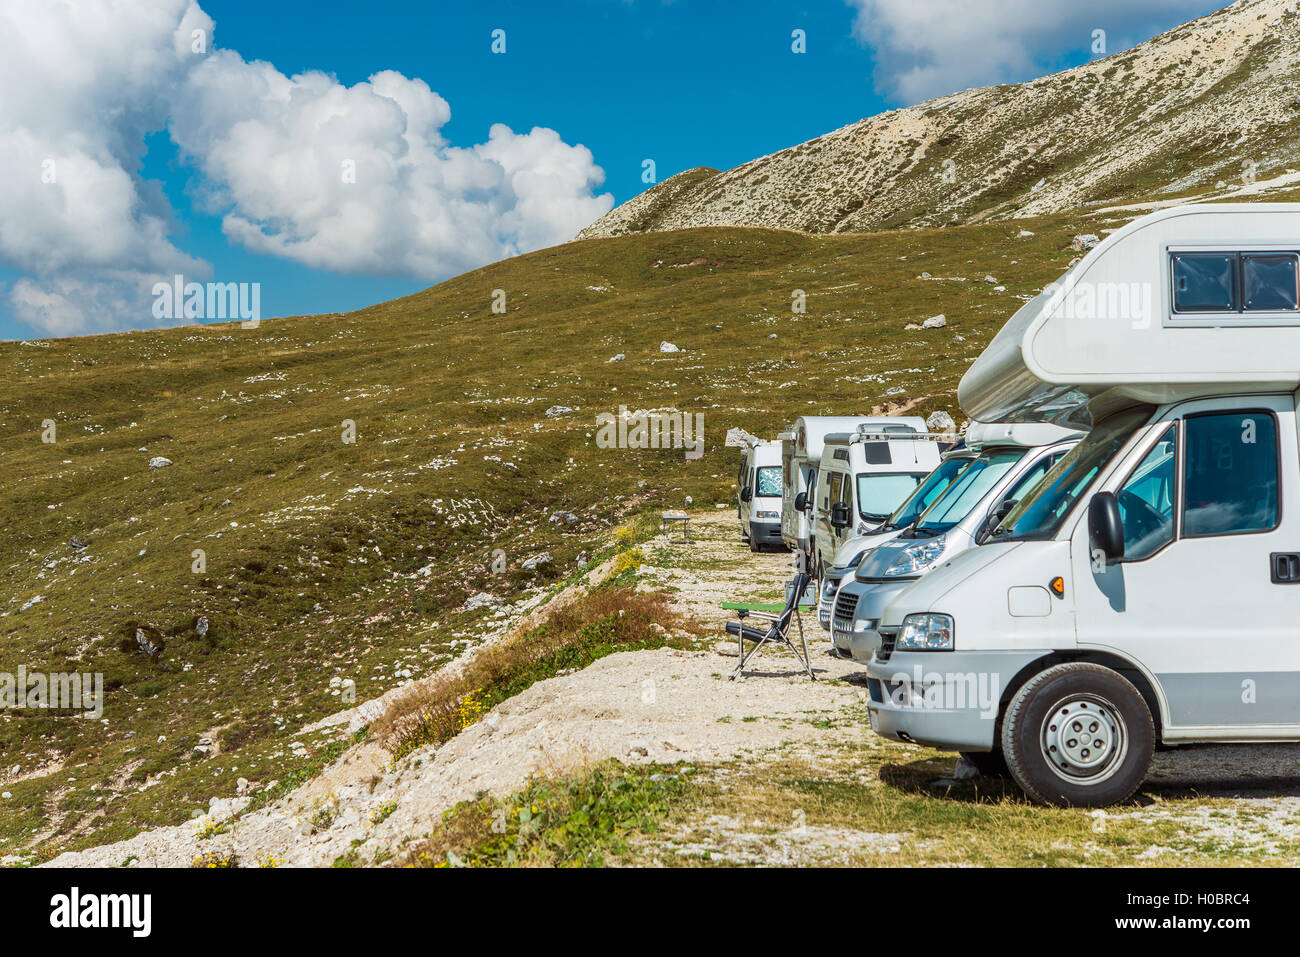 Camping Camping-car RV en haute montagne. Les campeurs pittoresques de camping. Banque D'Images